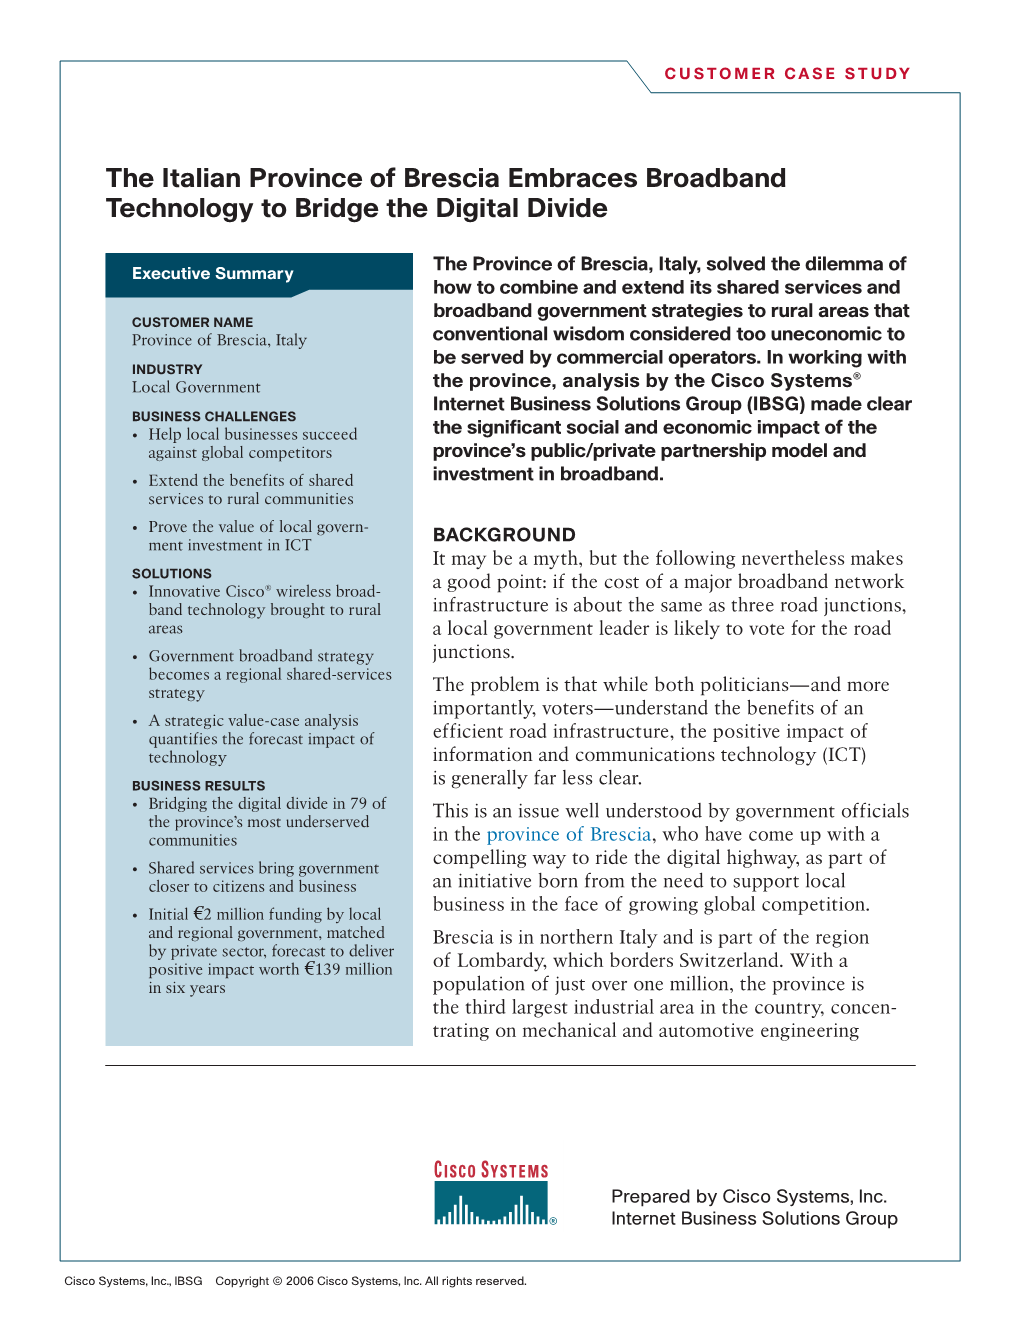 The Italian Province of Brescia Embraces Broadband Technology to Bridge the Digital Divide